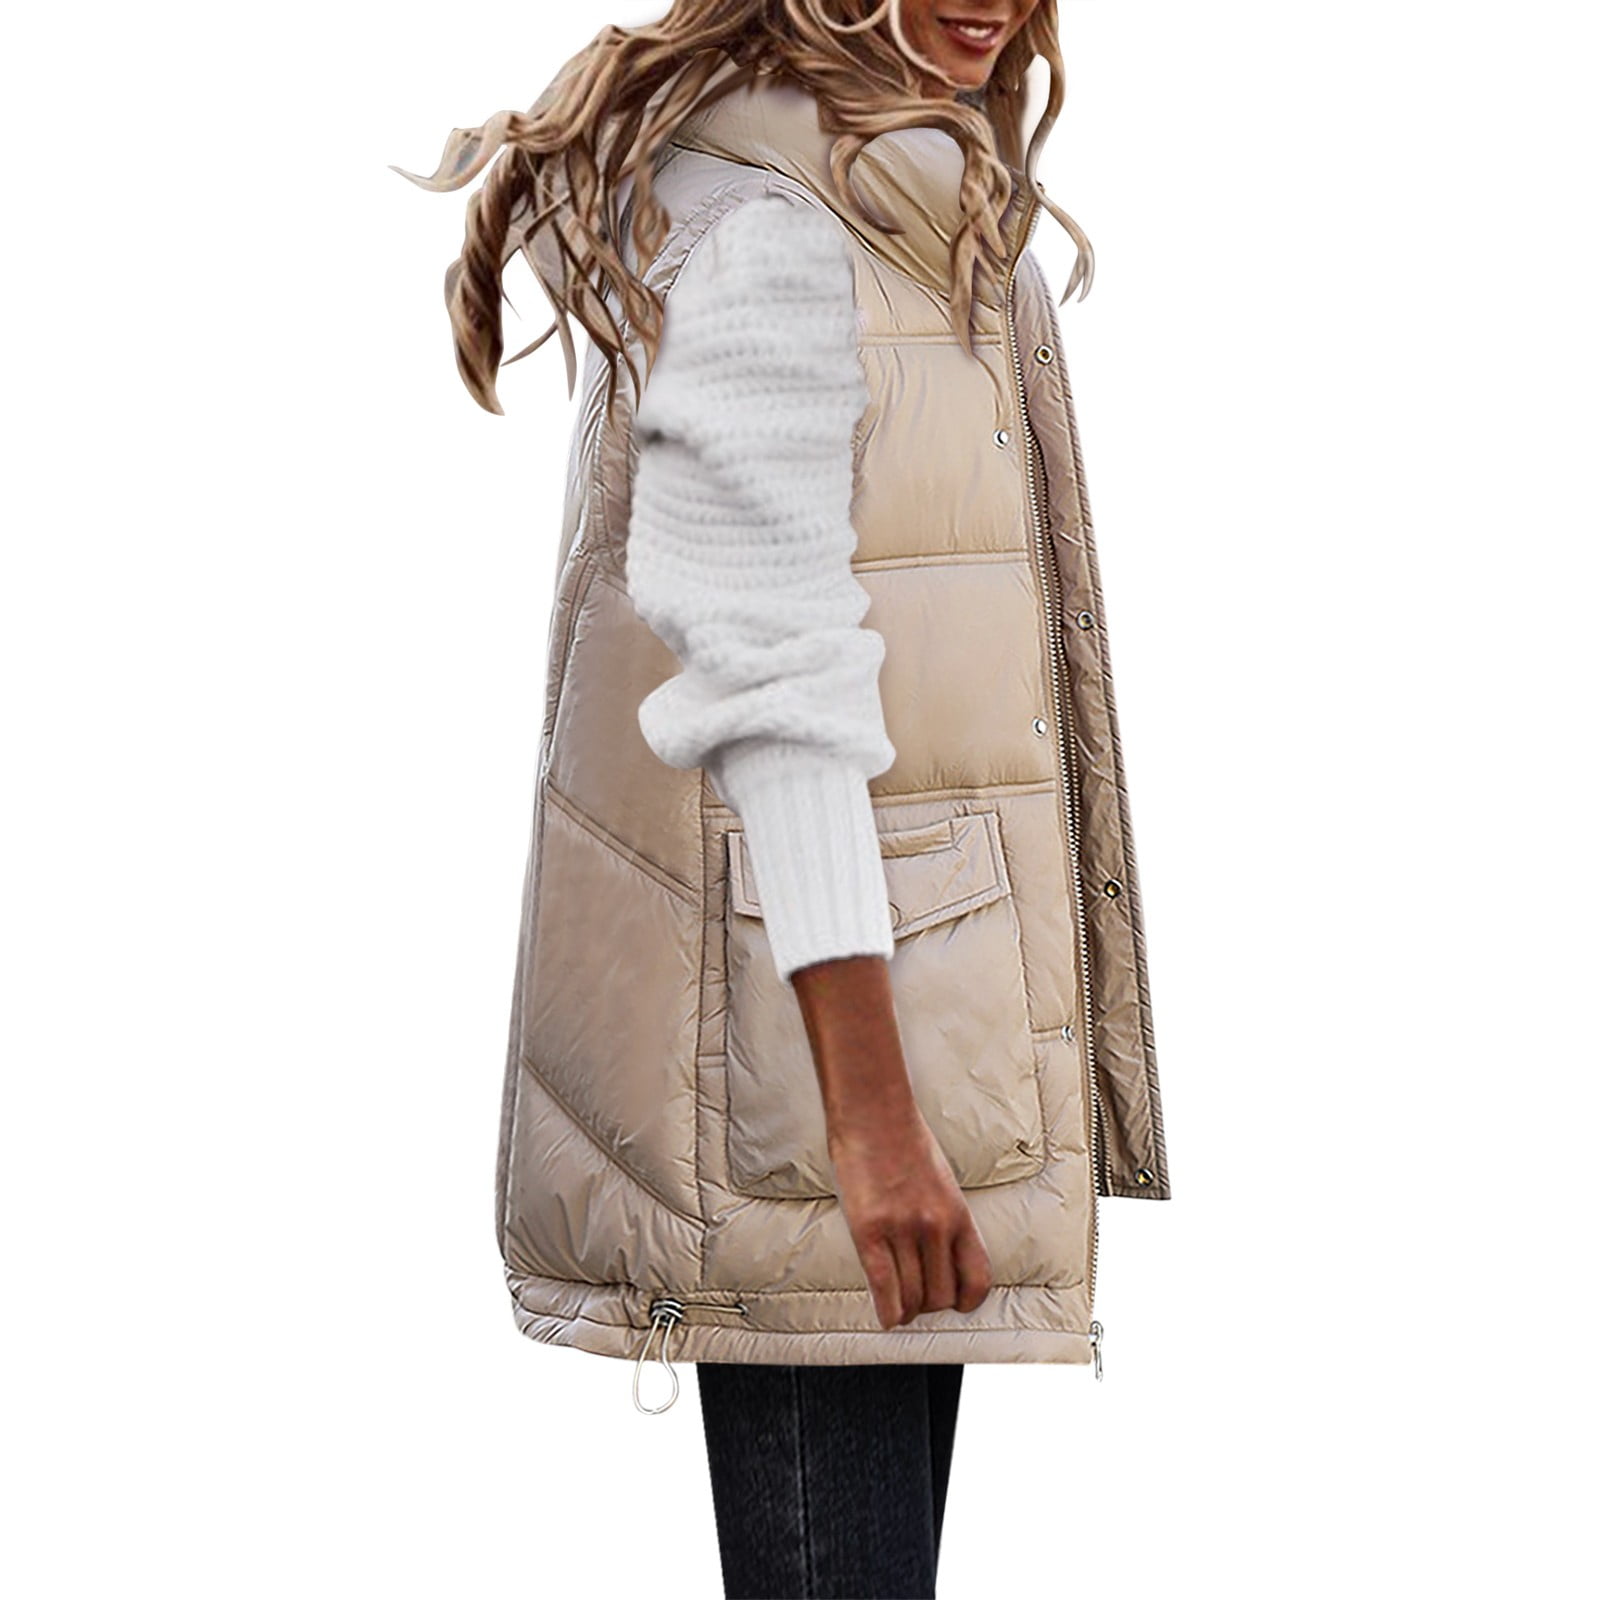 TOWED22 Women's Long Puffer Vest Cotton Sleeveless Puffy Jacket